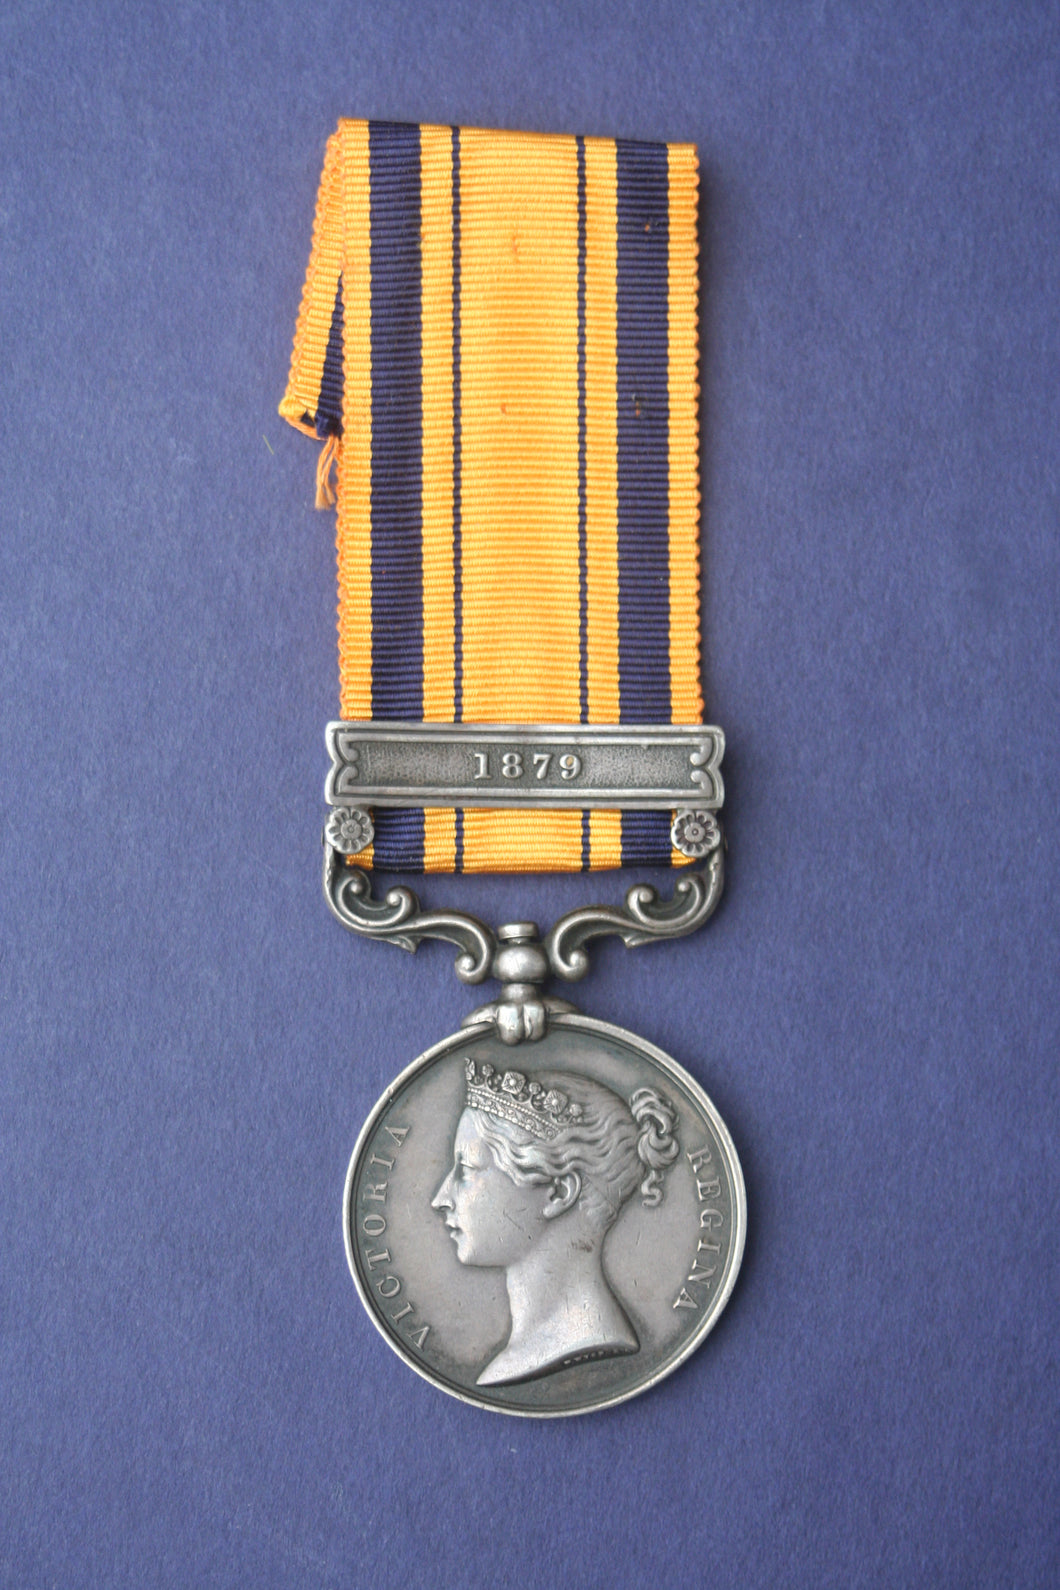 South Africa General Service Medal, 1879 bar (‘Anglo-Zulu War’) - 1495 Pte. J. Massie, 91st Highlanders.